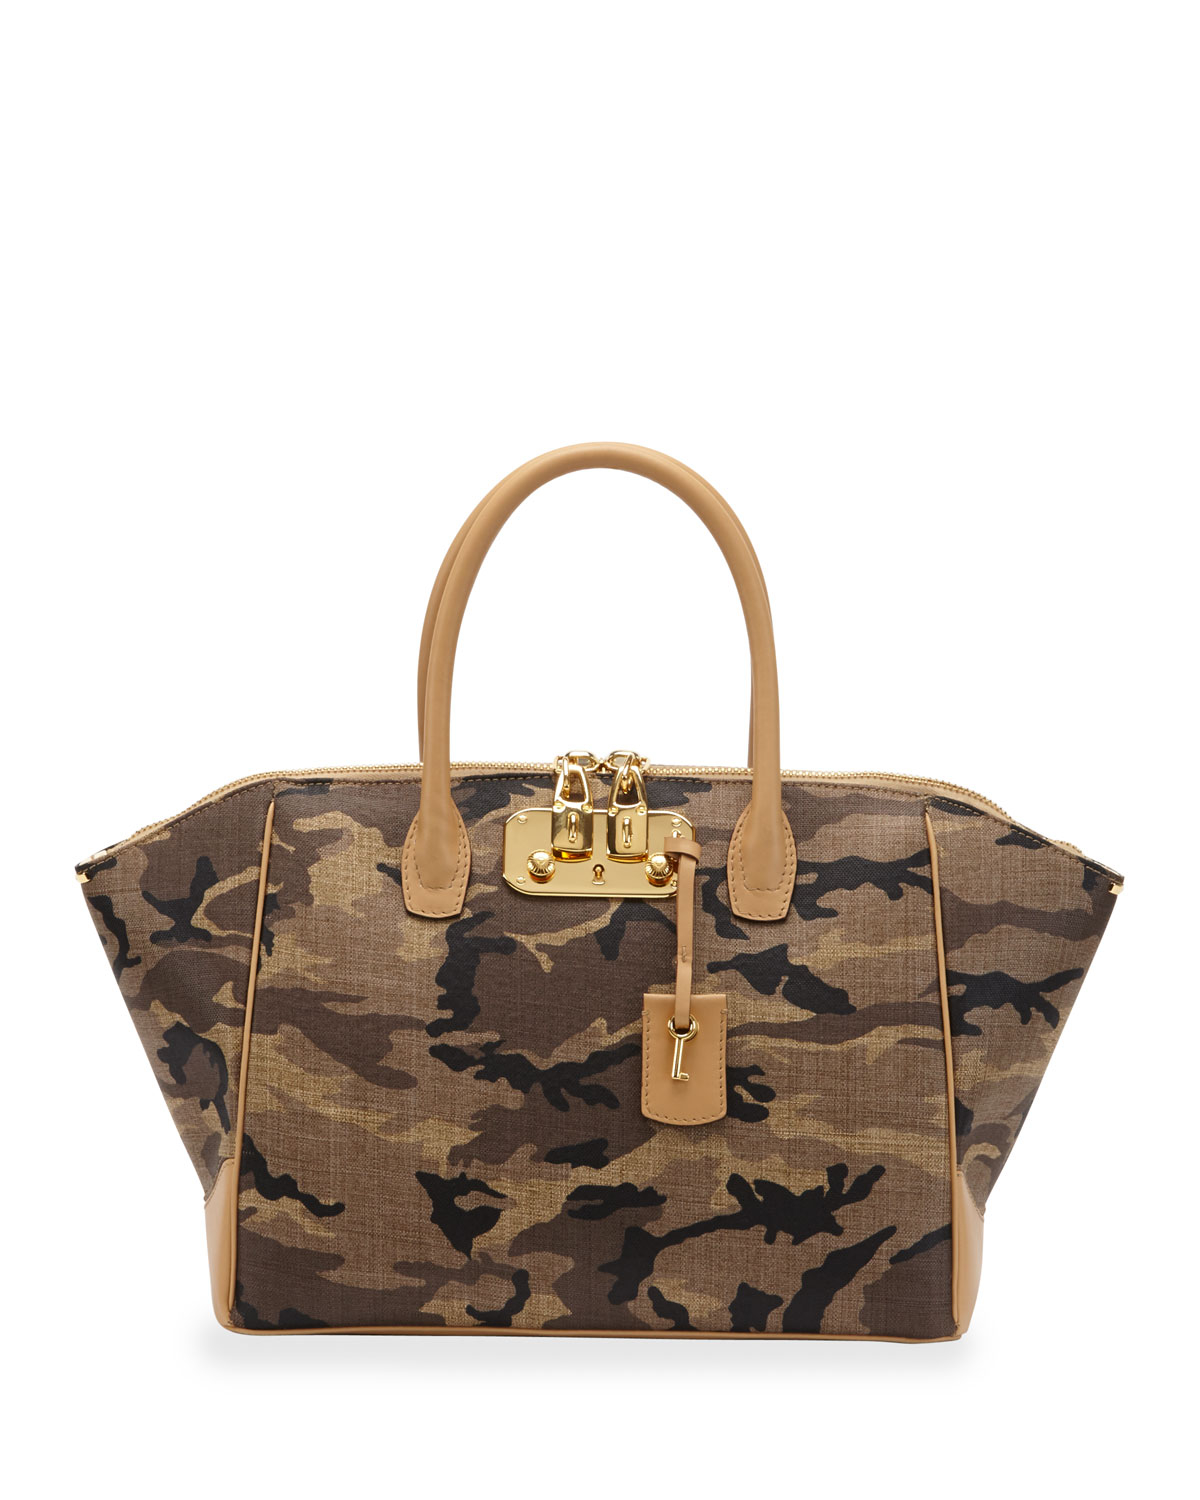 Vbh Brera 34 Camouflage Medium Satchel Bag in Multicolor (MULTI COLORS ...